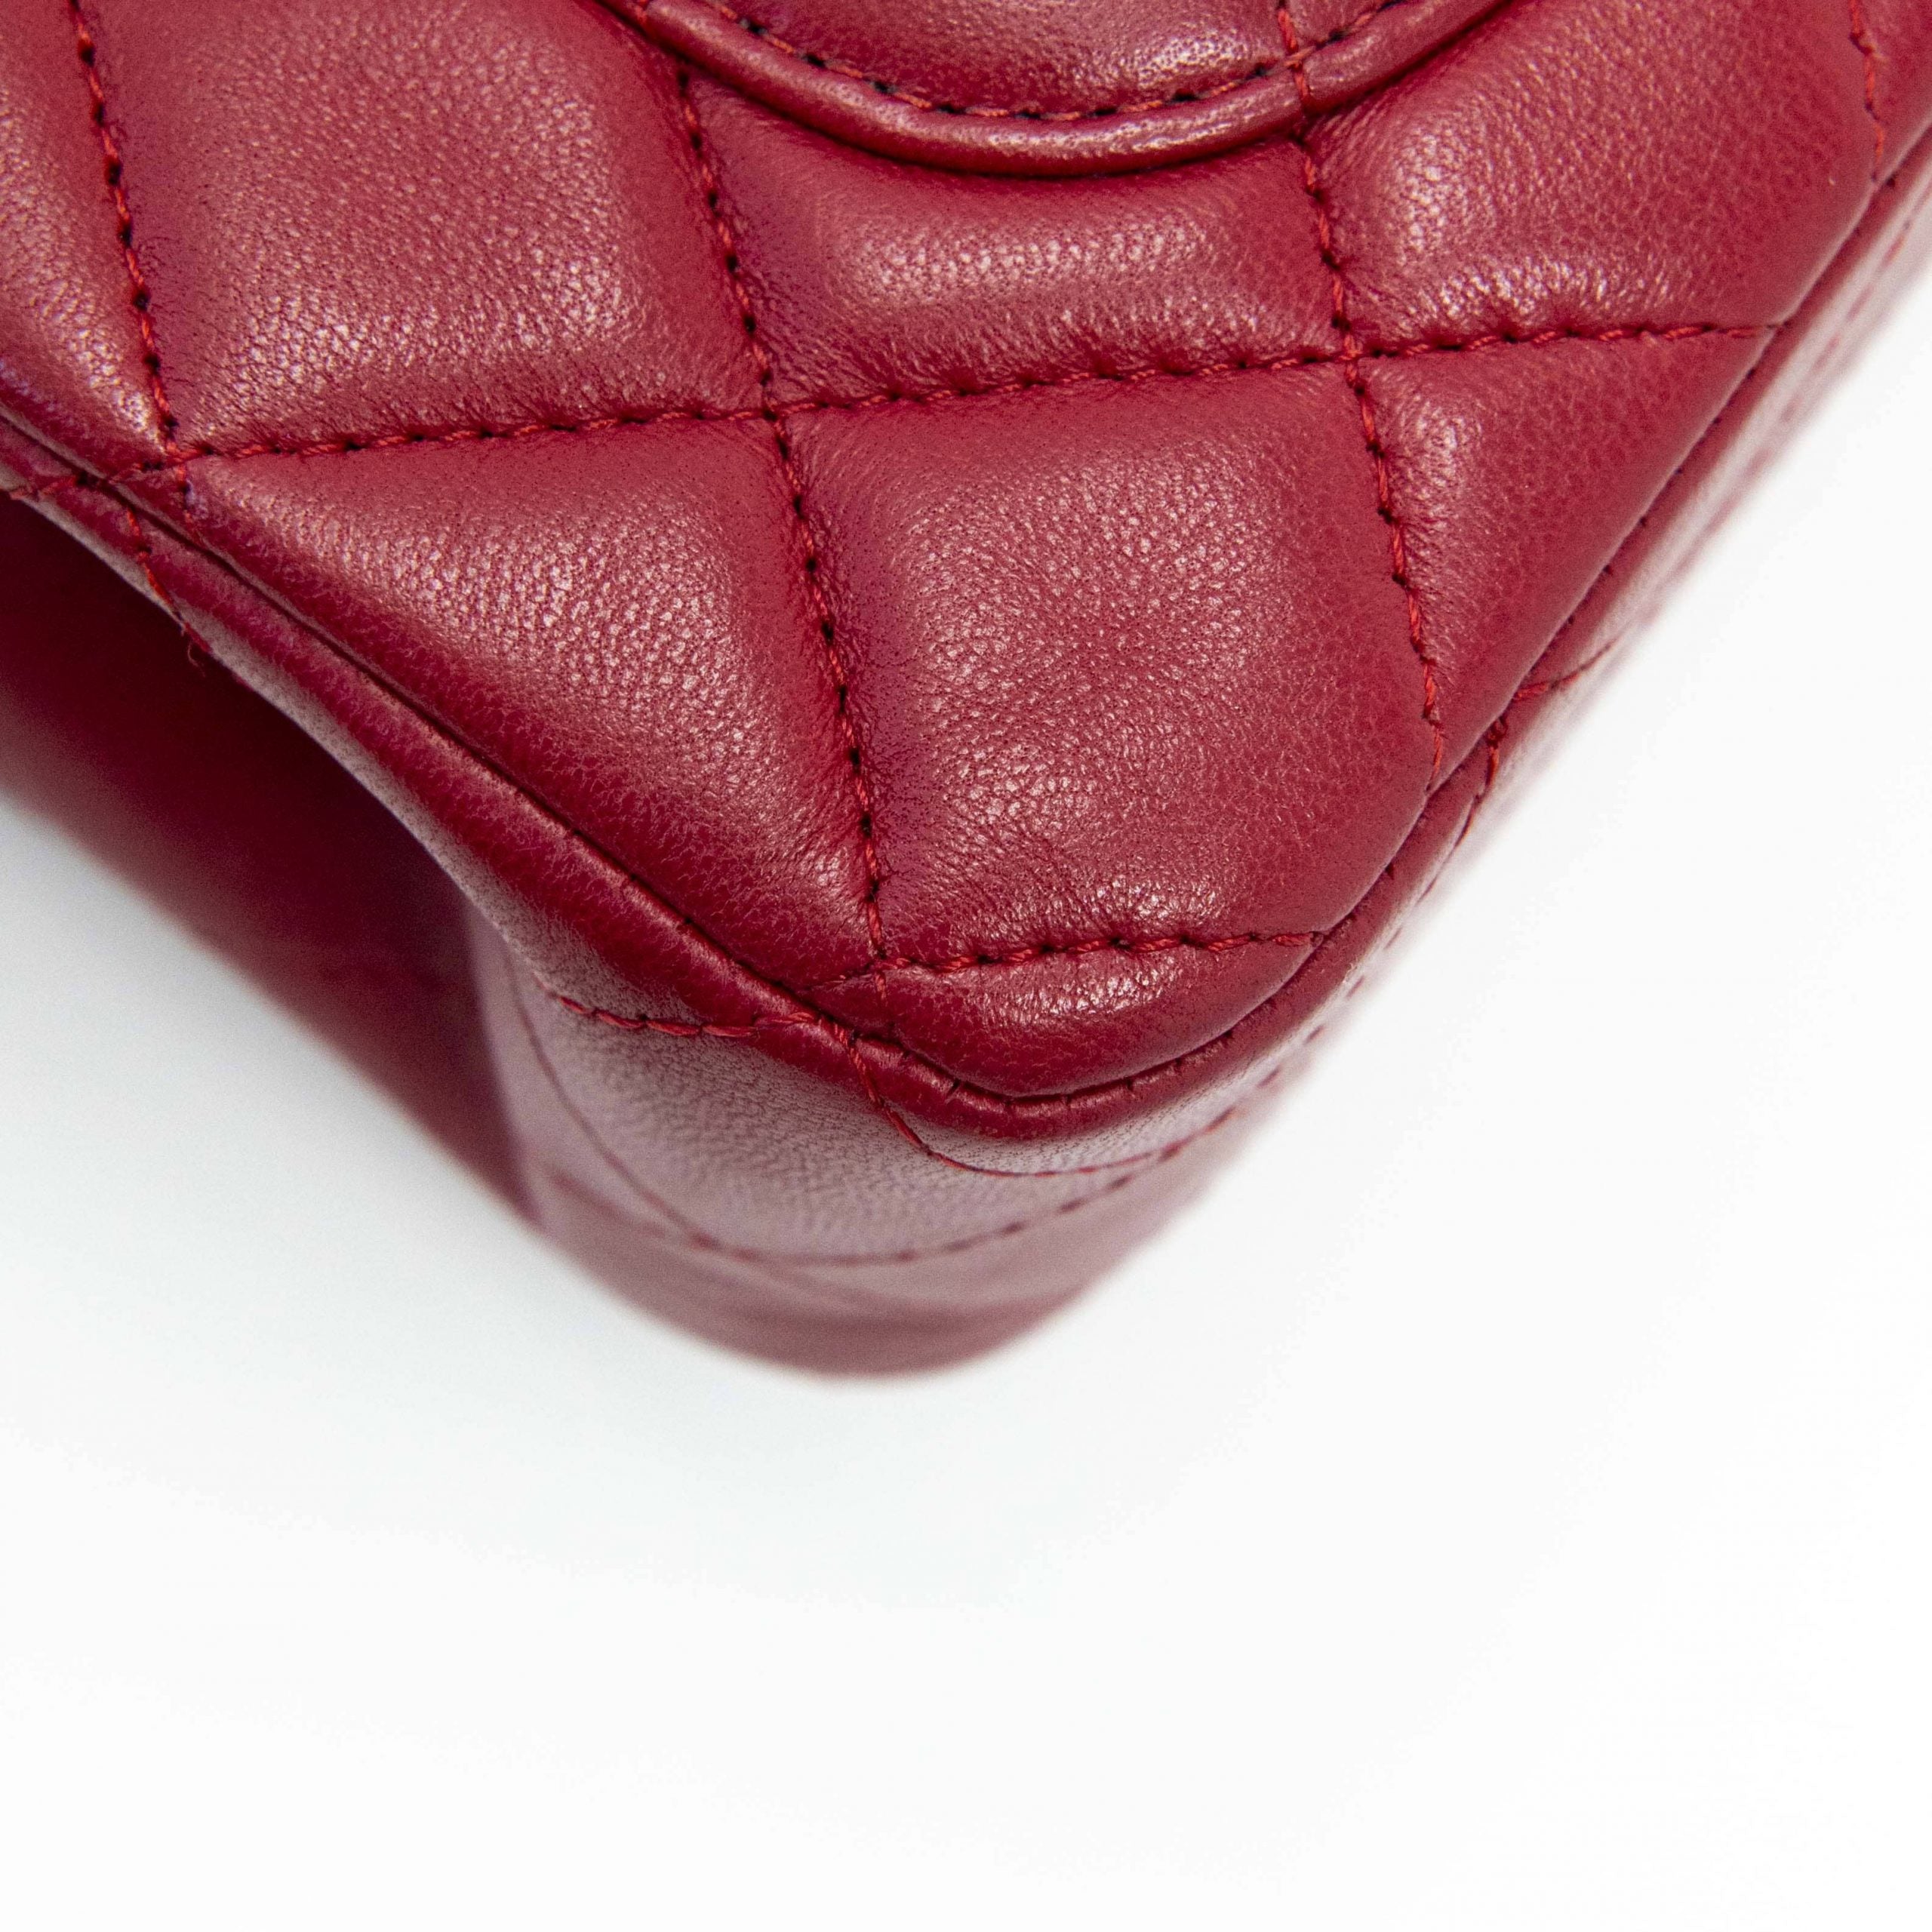 Chanel Red Lambskin Mini Classic Flap Bag